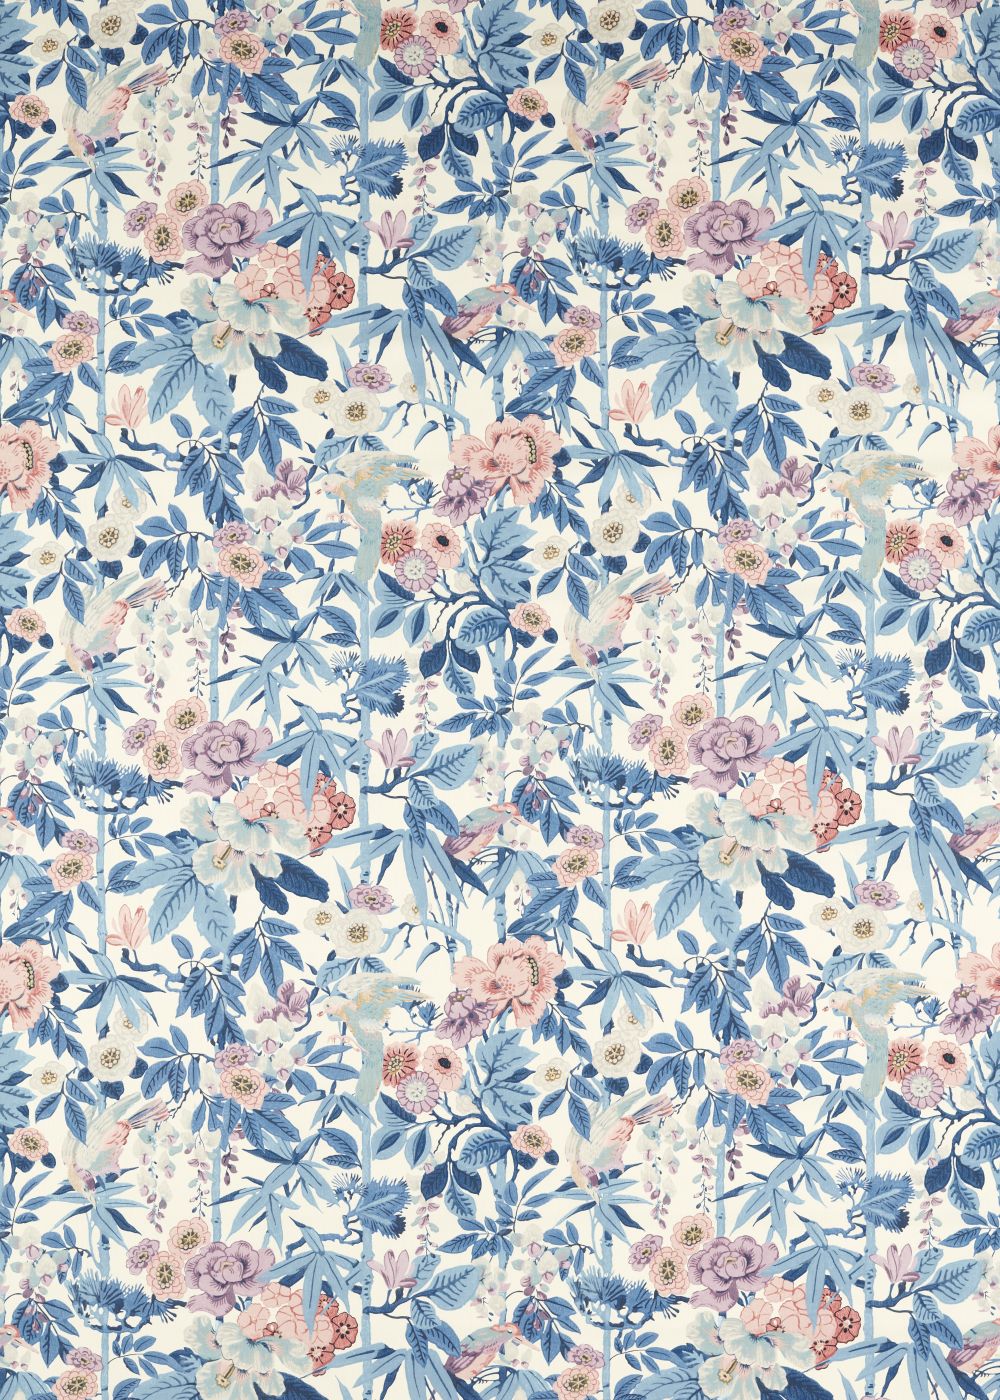 Bamboo & Bird Fabric - China Blue / Lotus Pink - by Sanderson